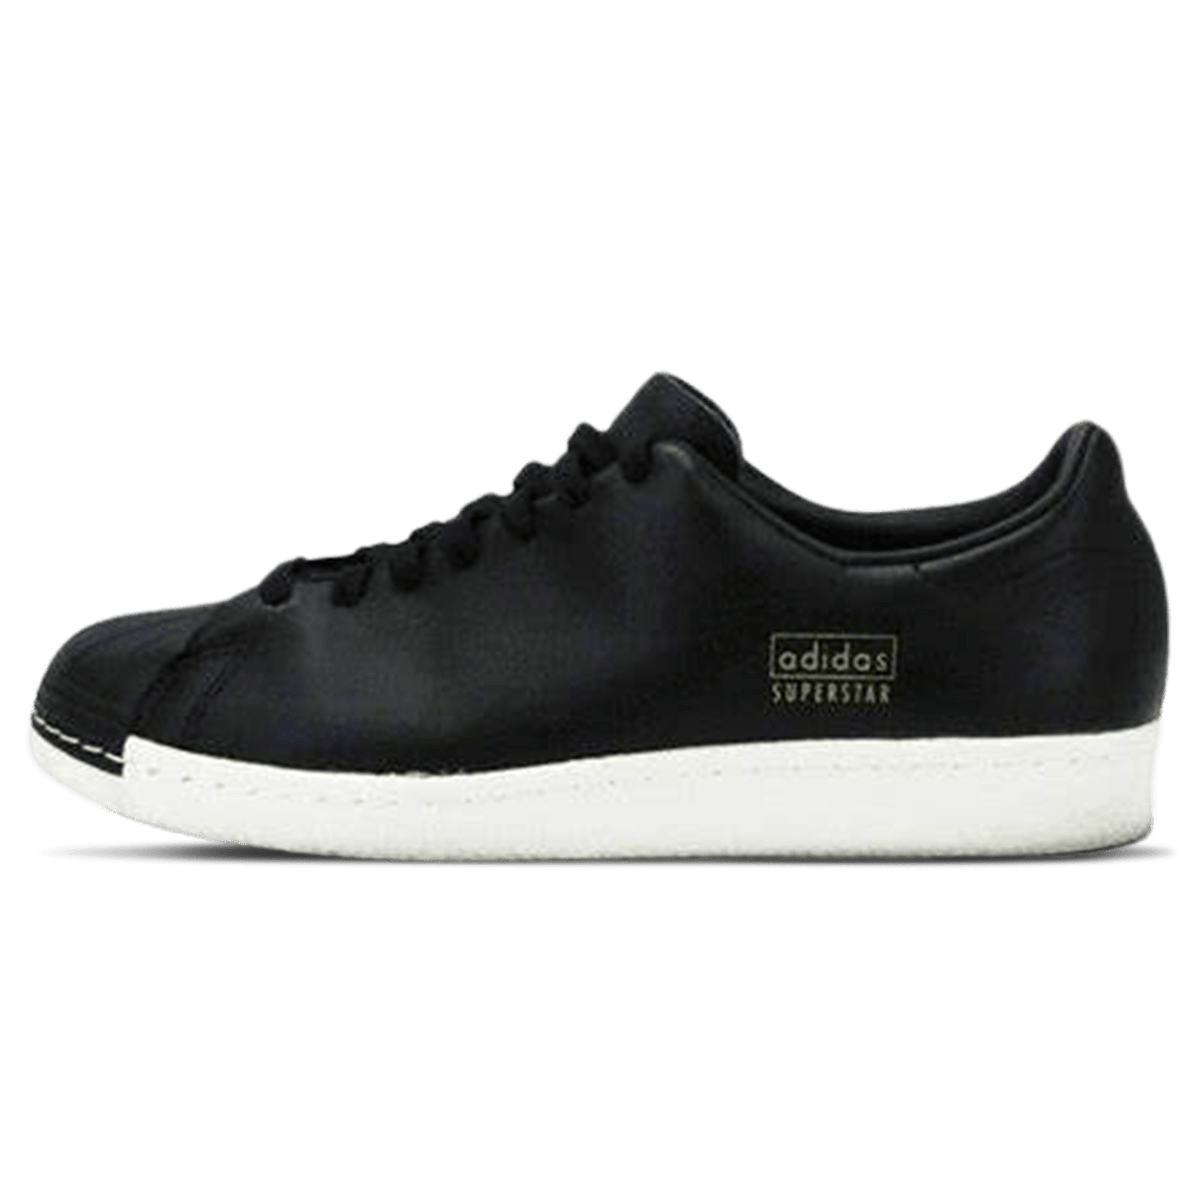 Adidas Superstar 80s Clean 'Black Gold' - Kick Game